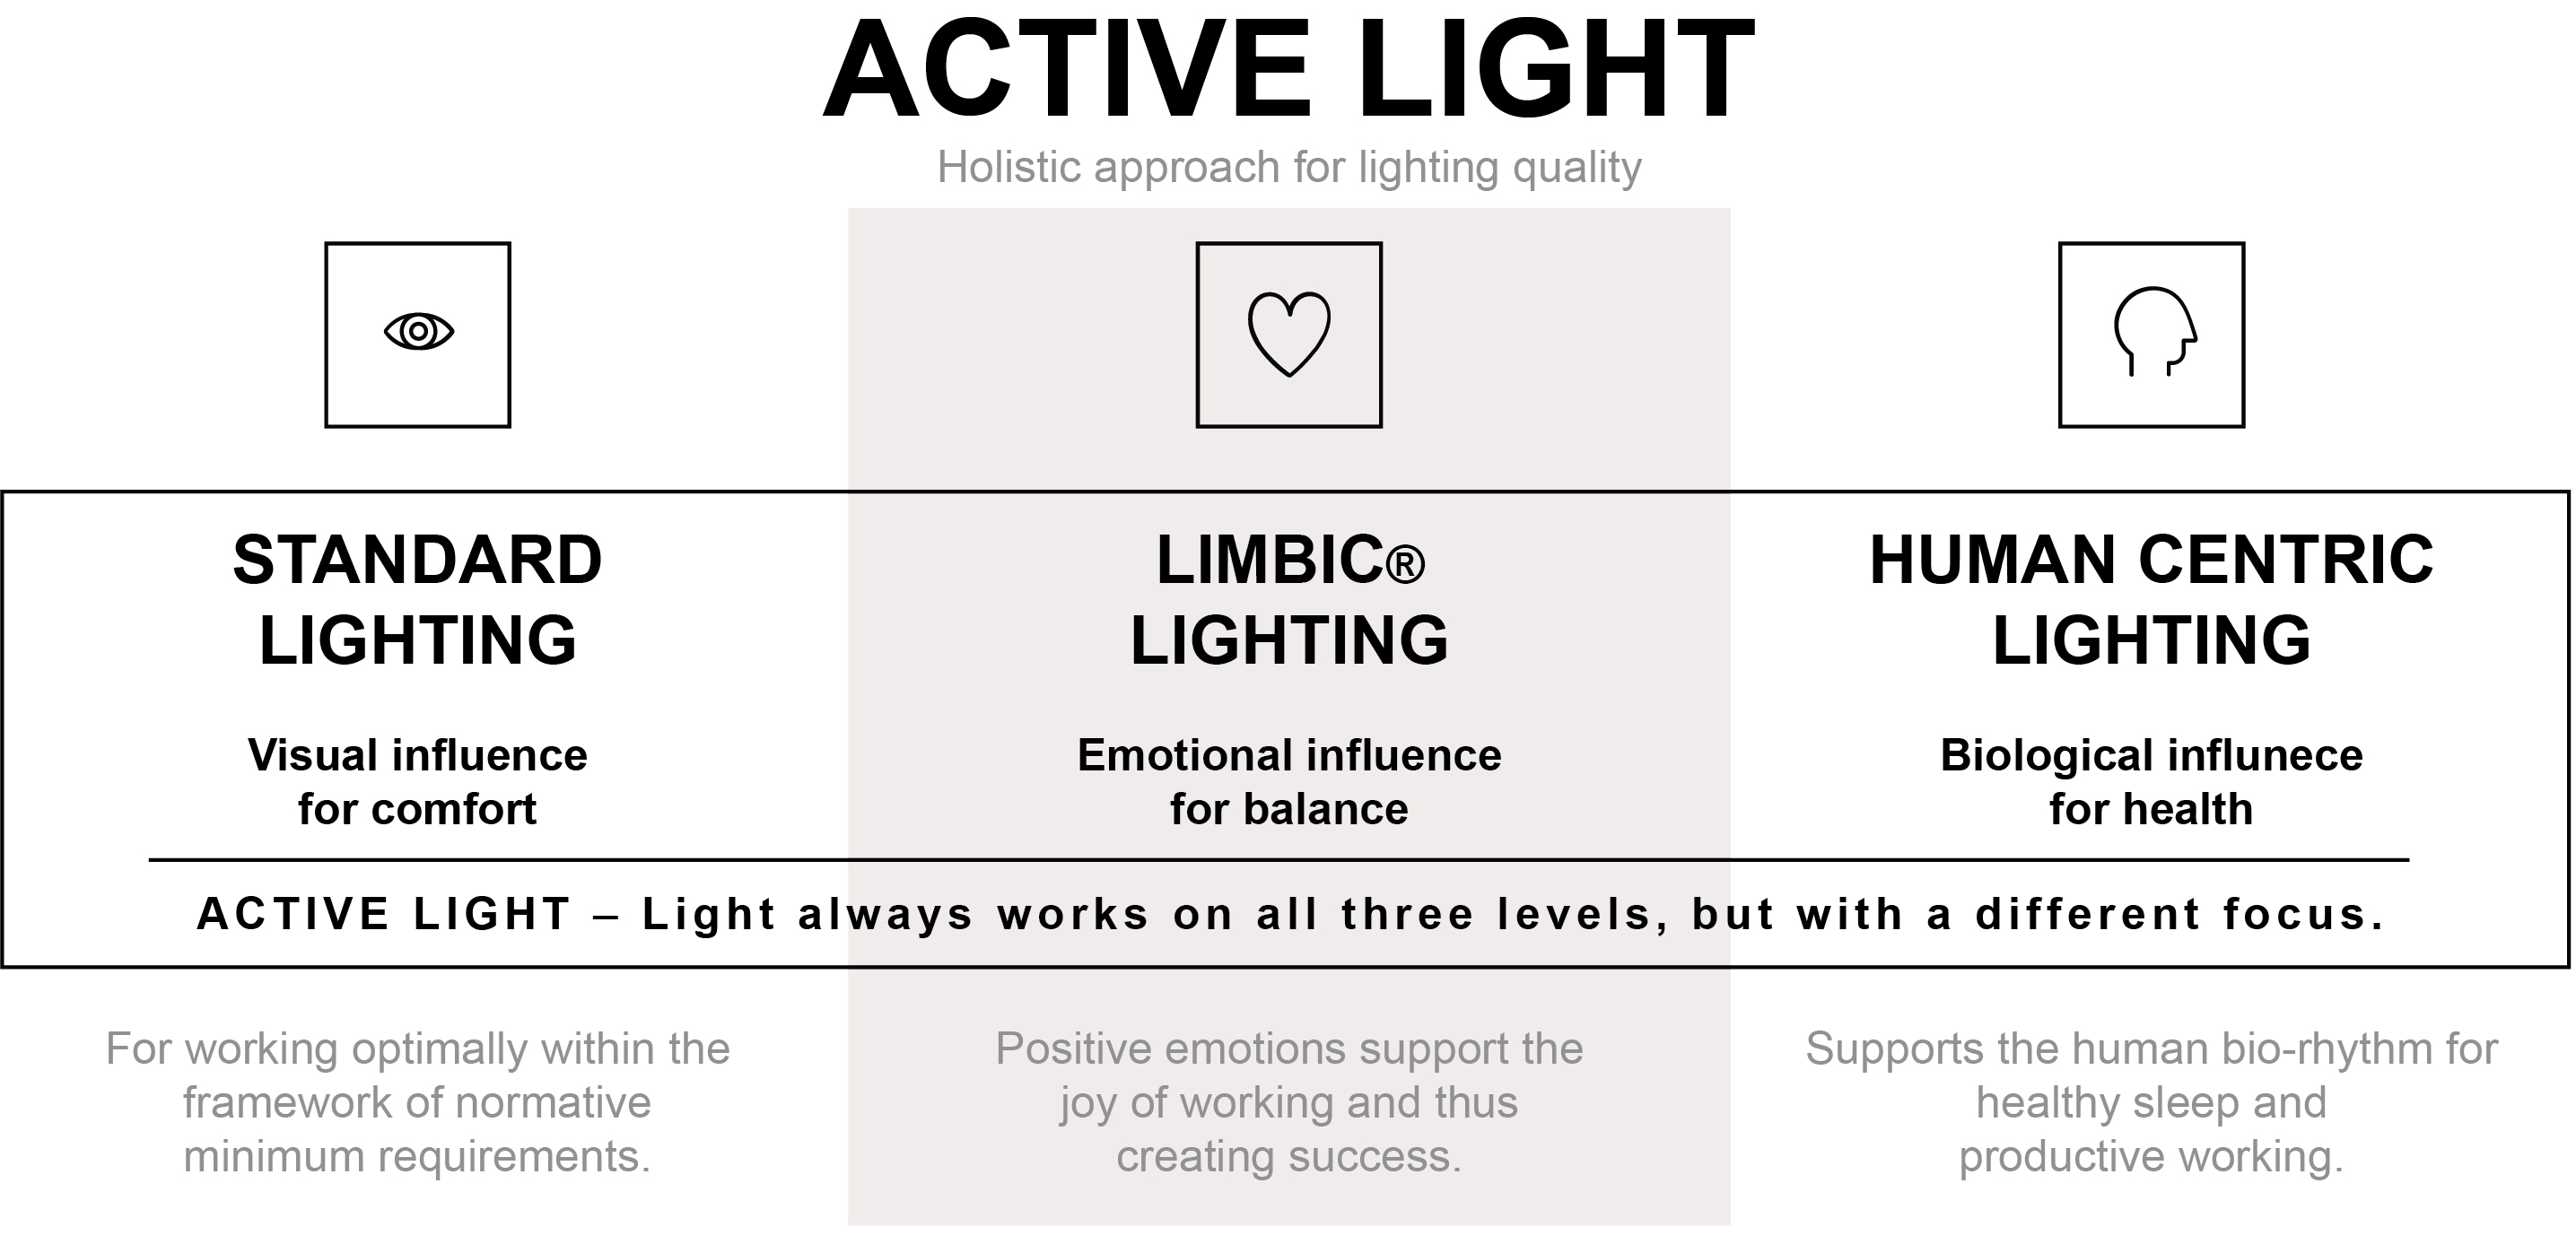 ACTIVE LIGHT